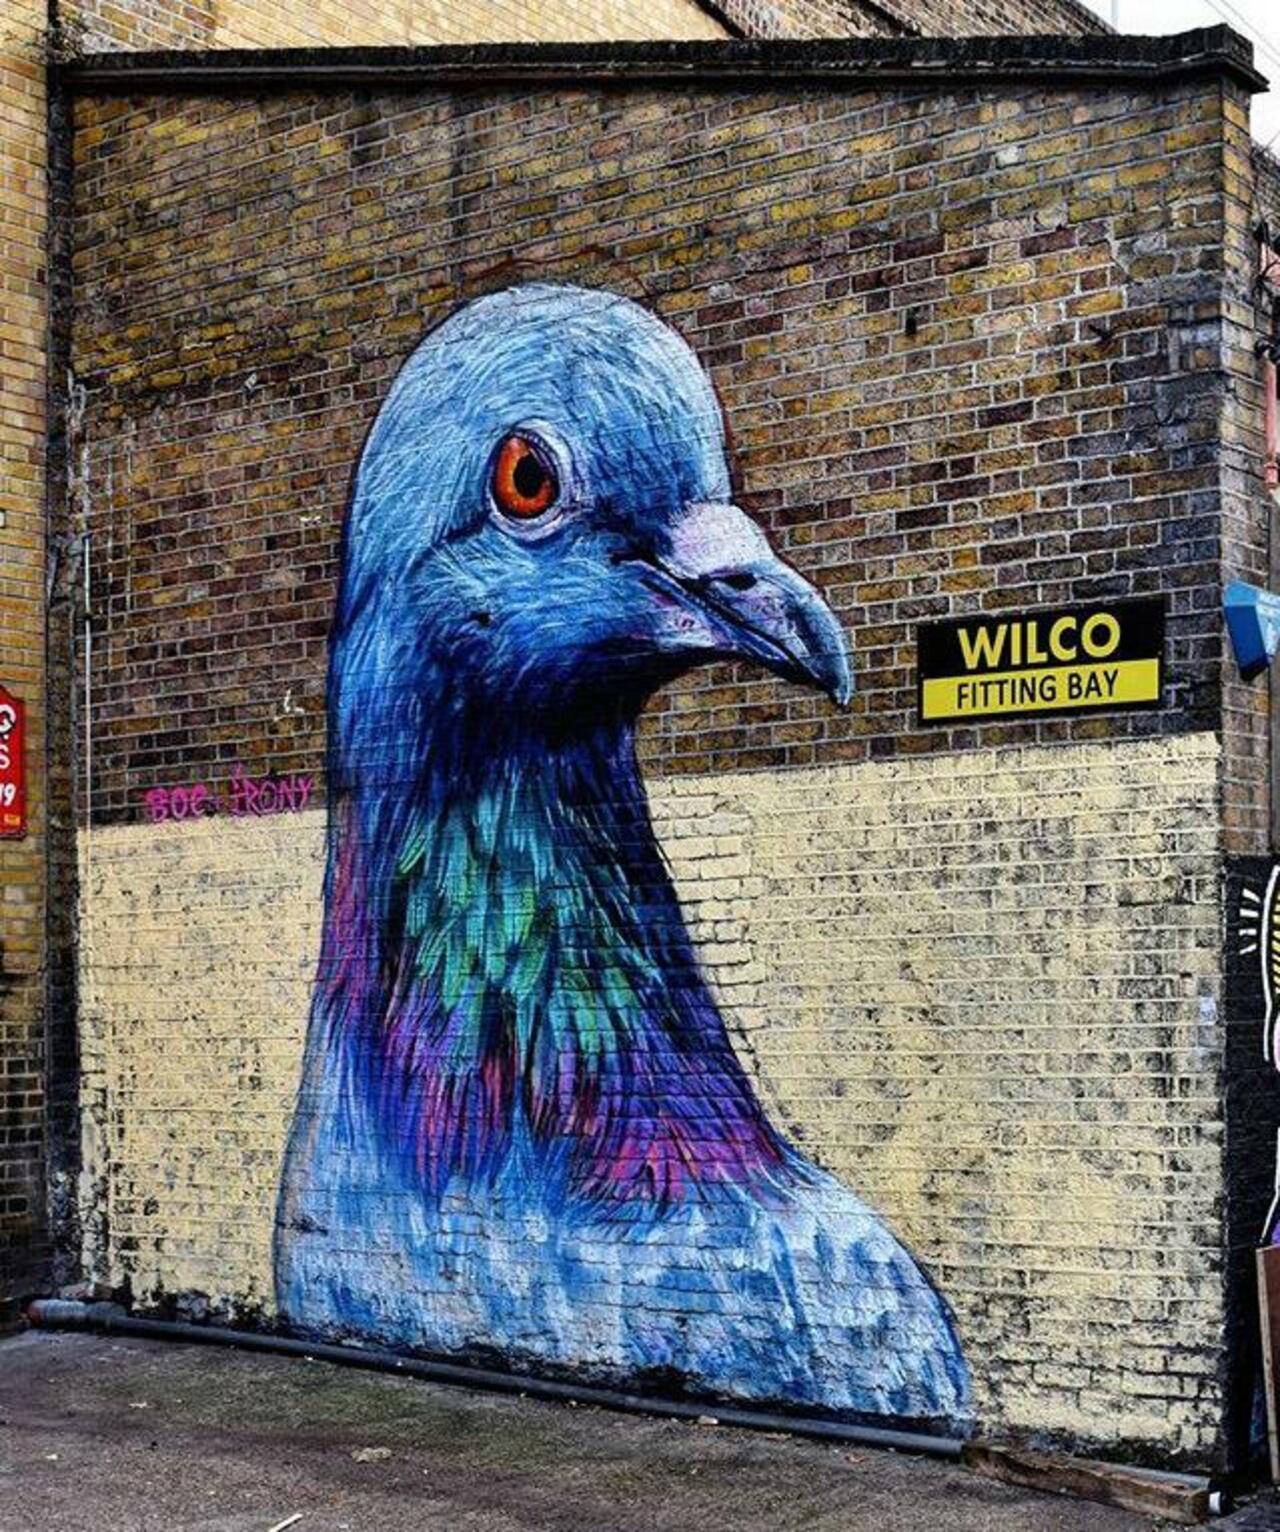 Street Art by Placee Boe & whoamirony in London 

#art #graffiti #mural #streetart http://t.co/XKtVUFtdAV